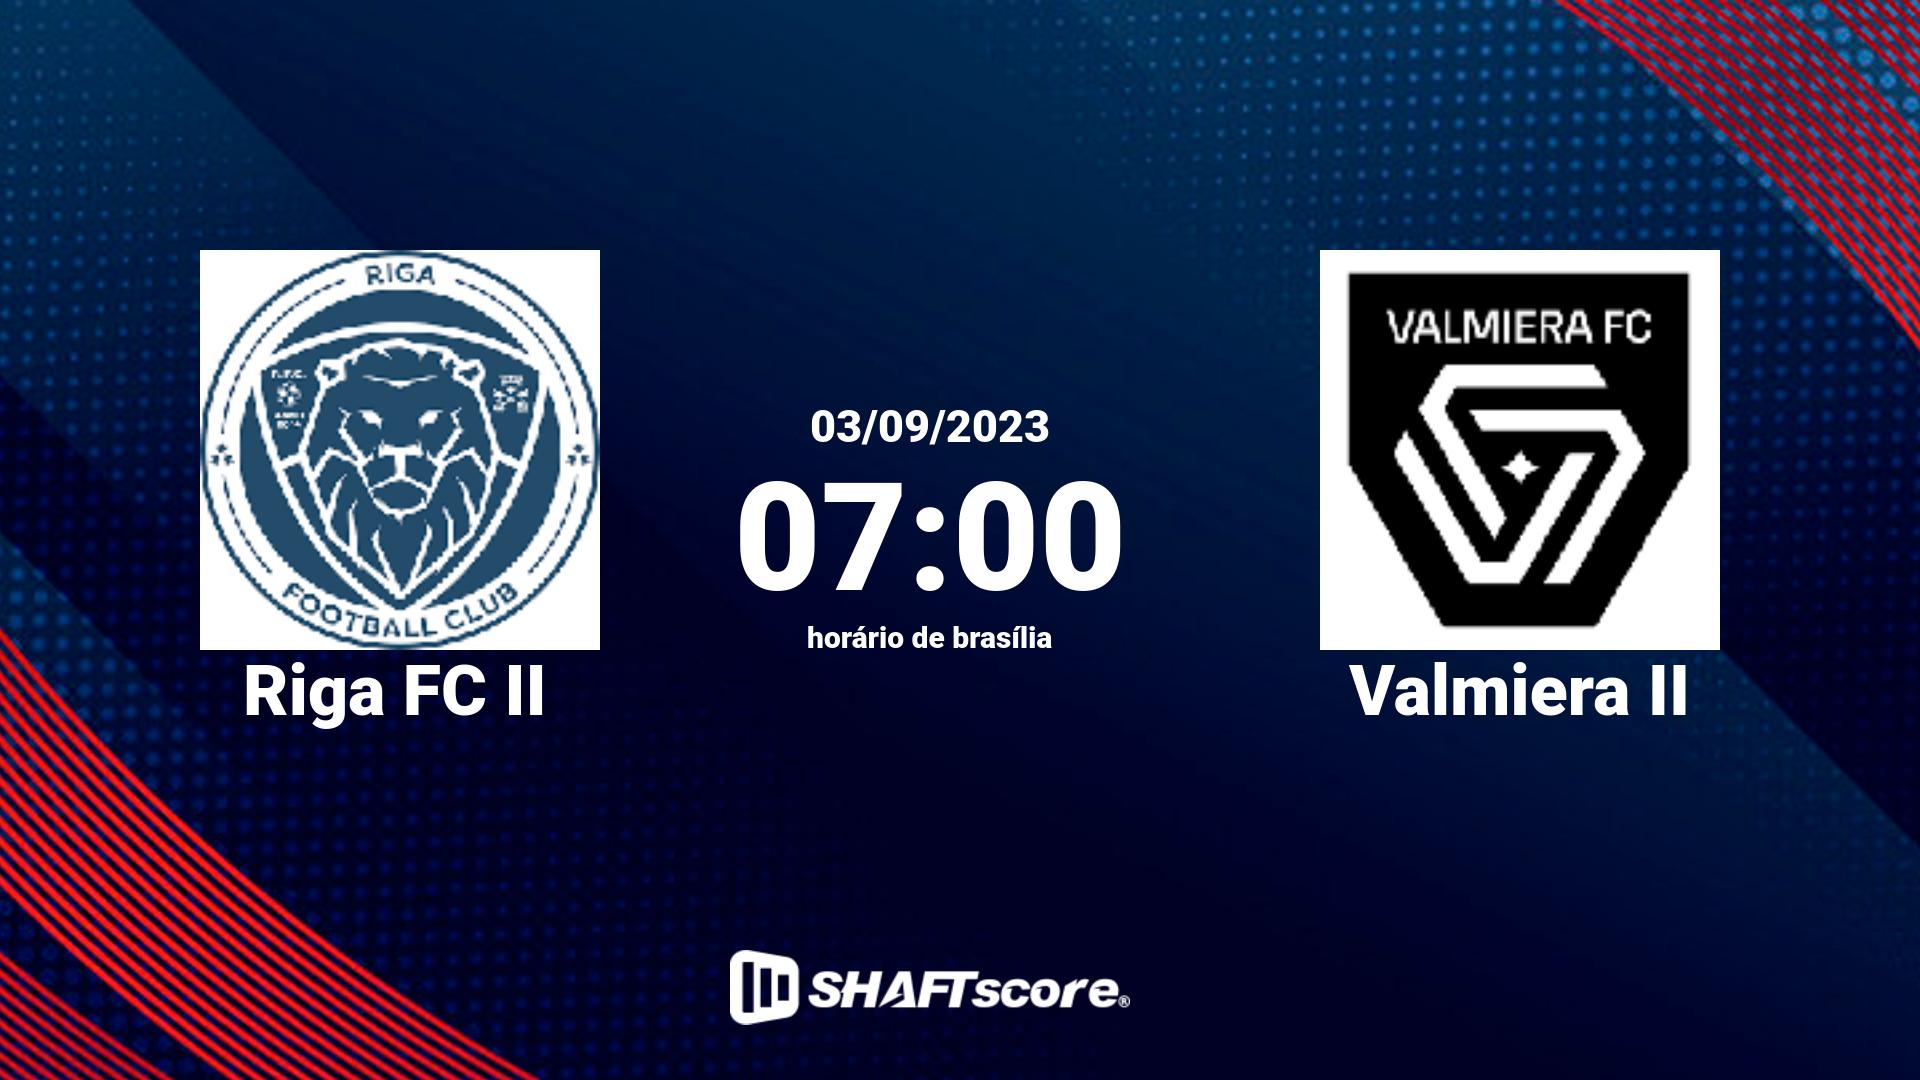 Estatísticas do jogo Riga FC II vs Valmiera II 03.09 07:00